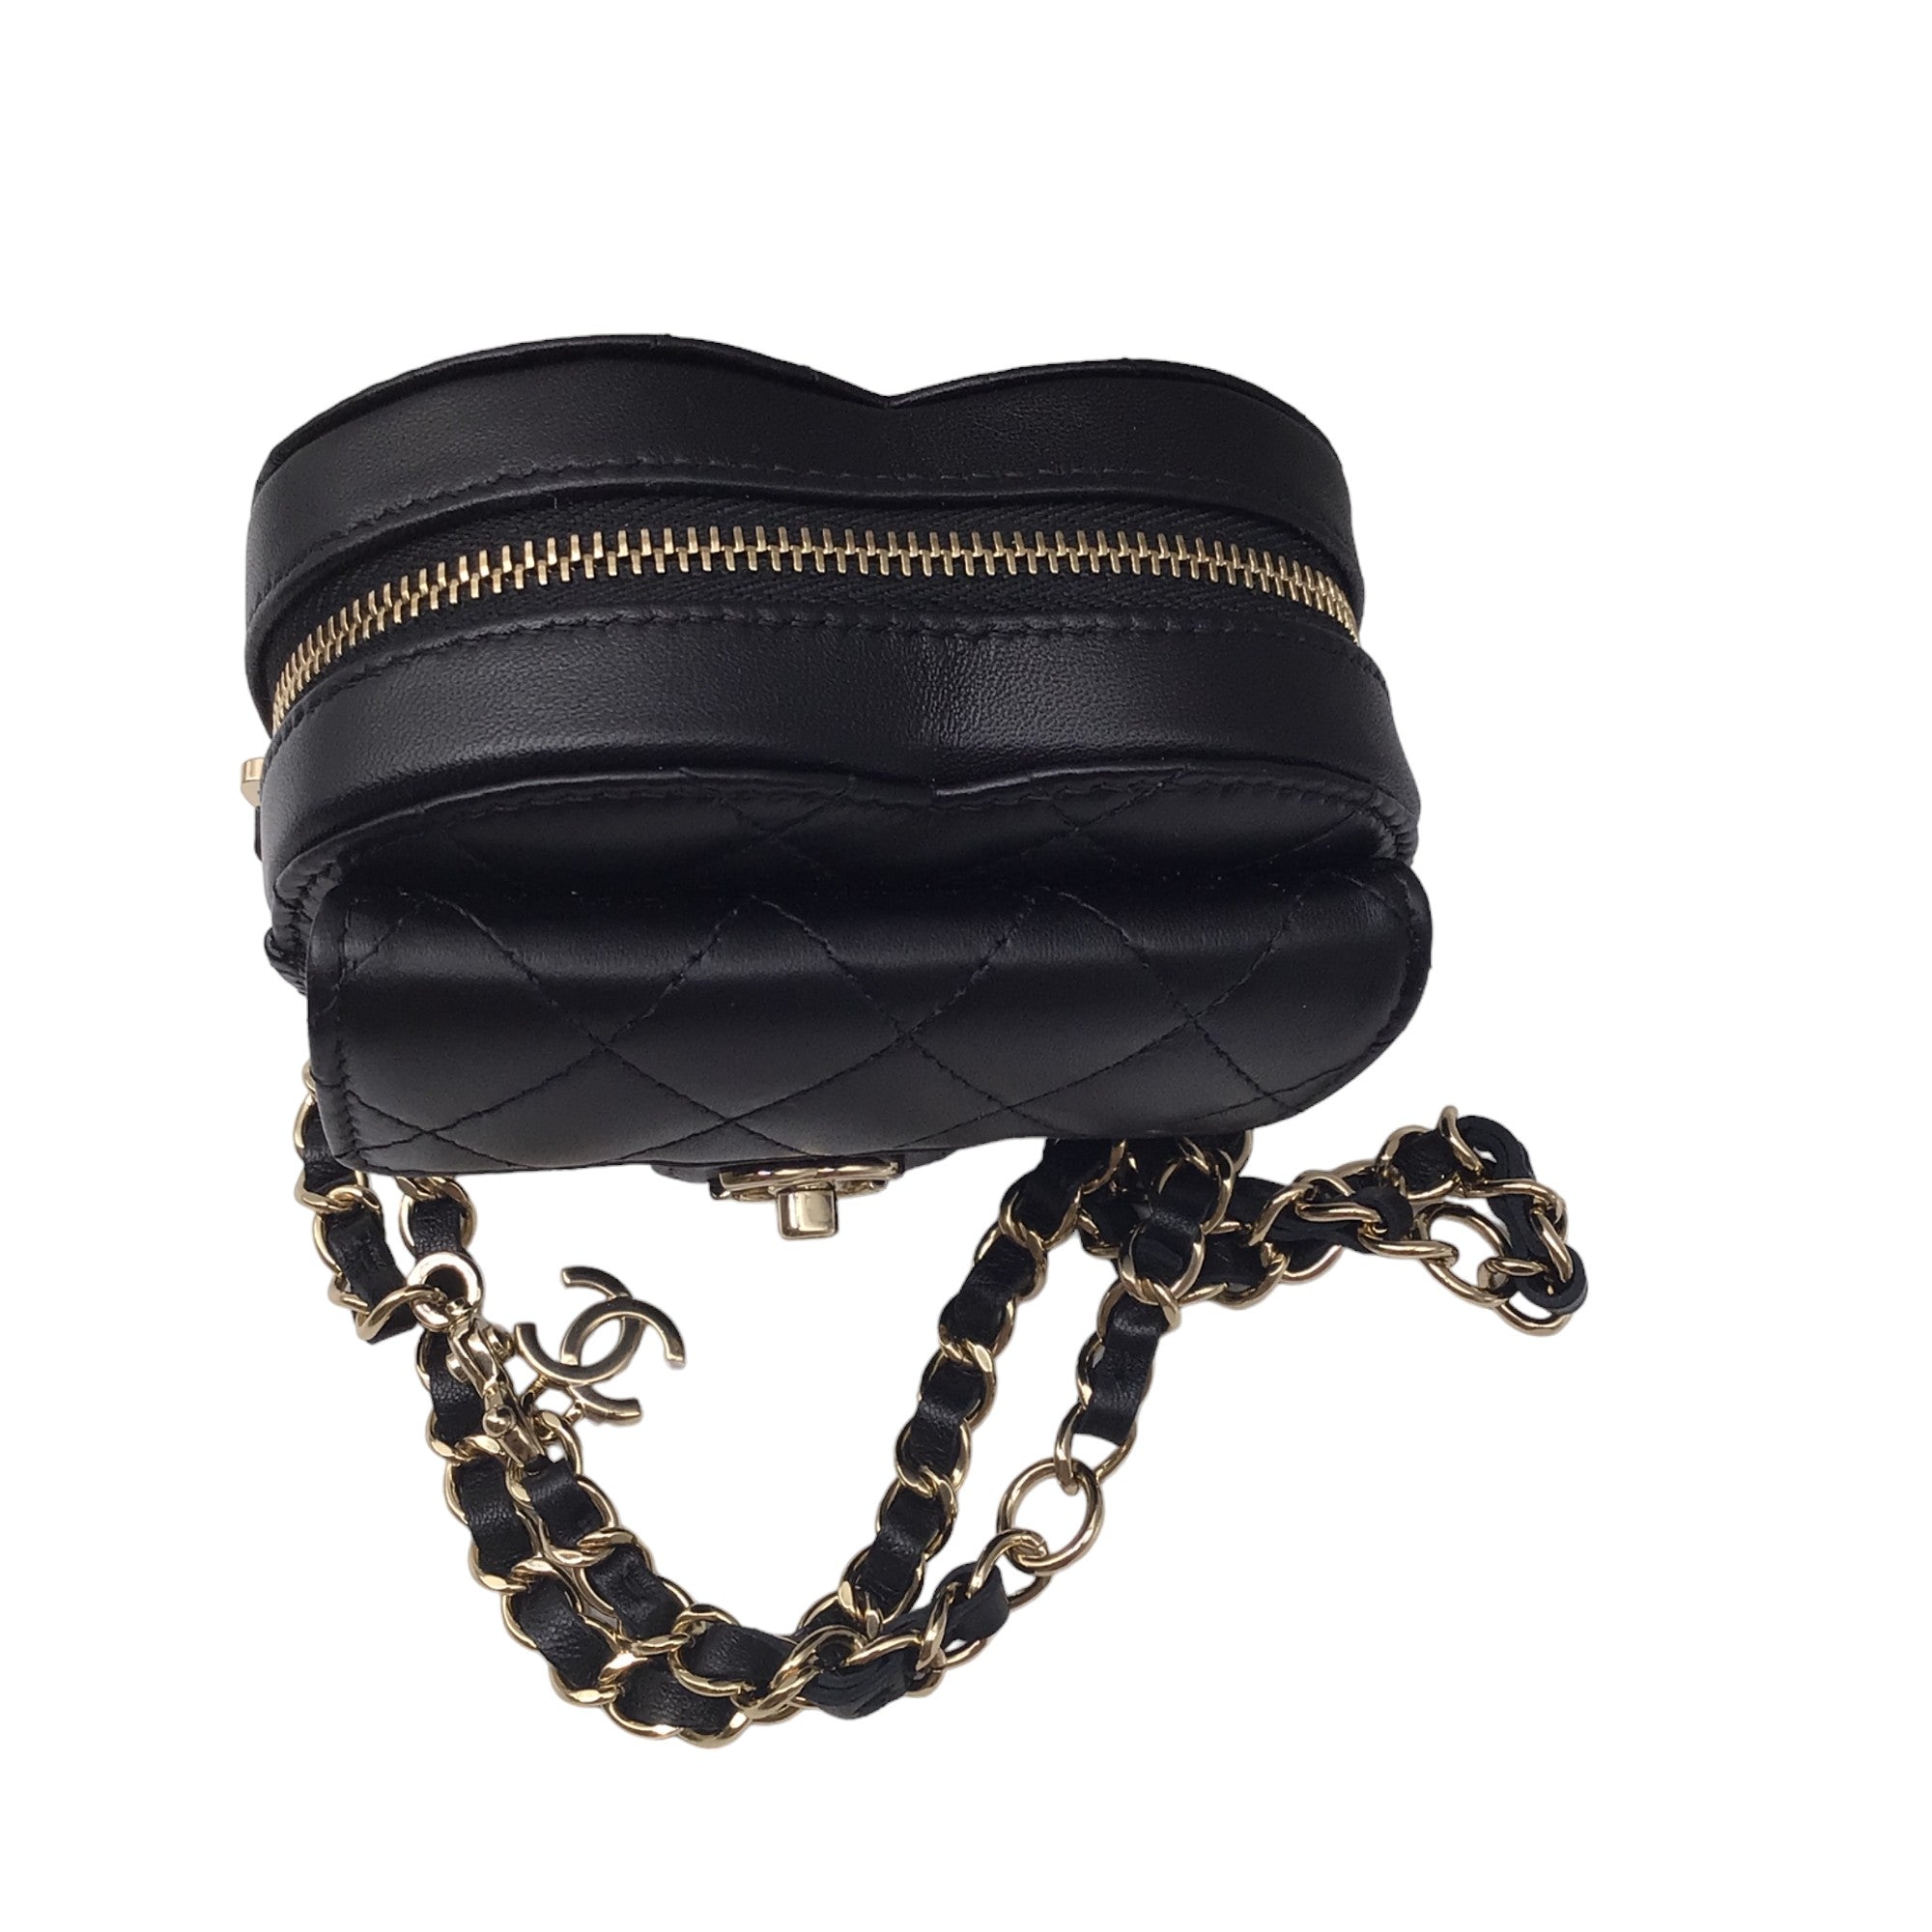 Chanel Black 2022 Quilted Lambskin Leather Mini Heart Handbag